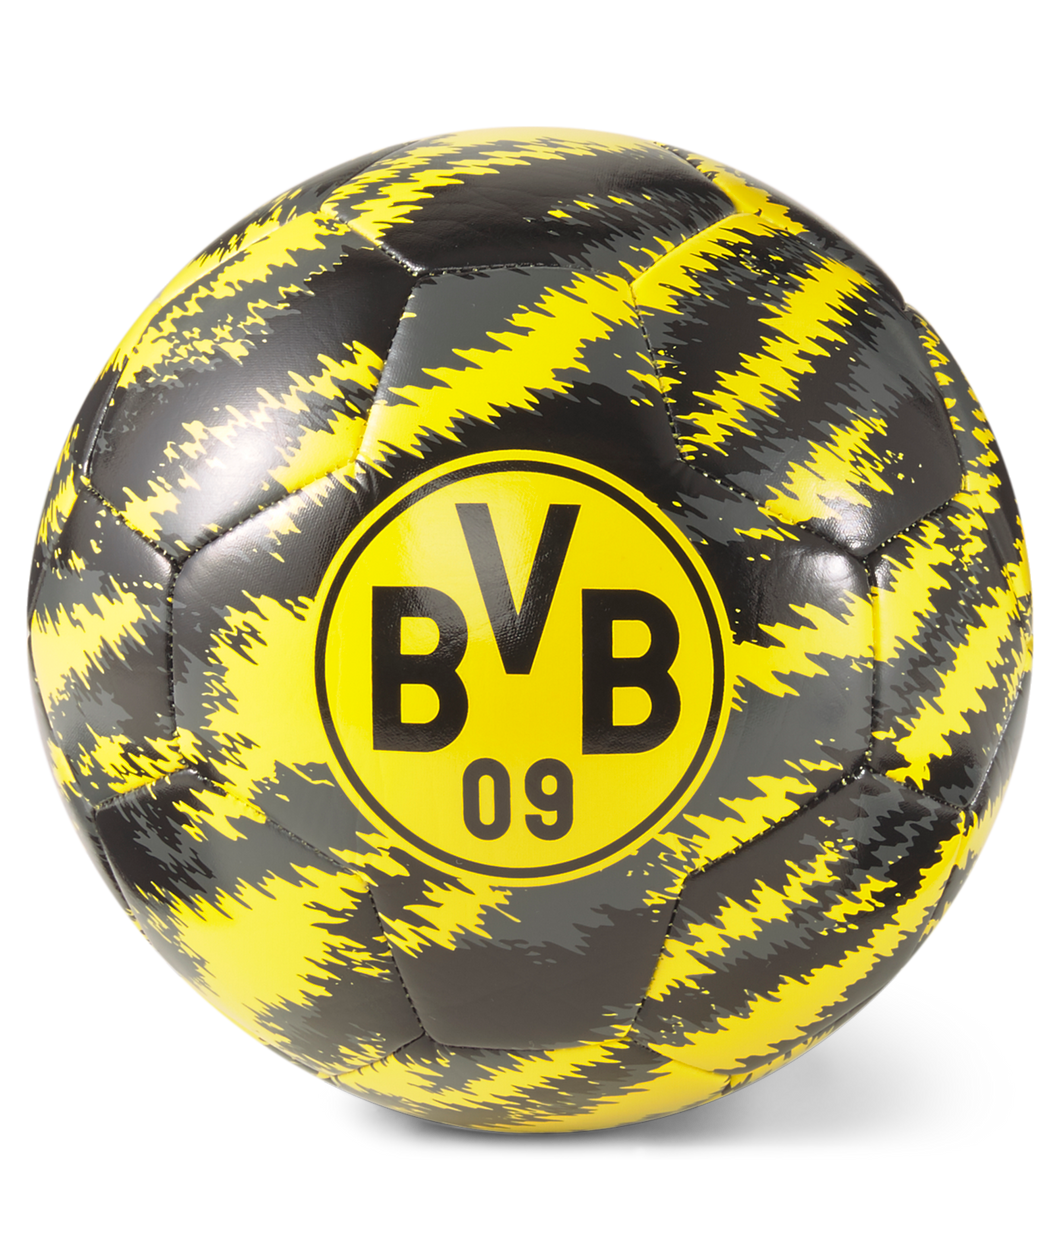 PUMA Borussia Dortmund Club Ball 083496 02 - YELLOW/BLACK